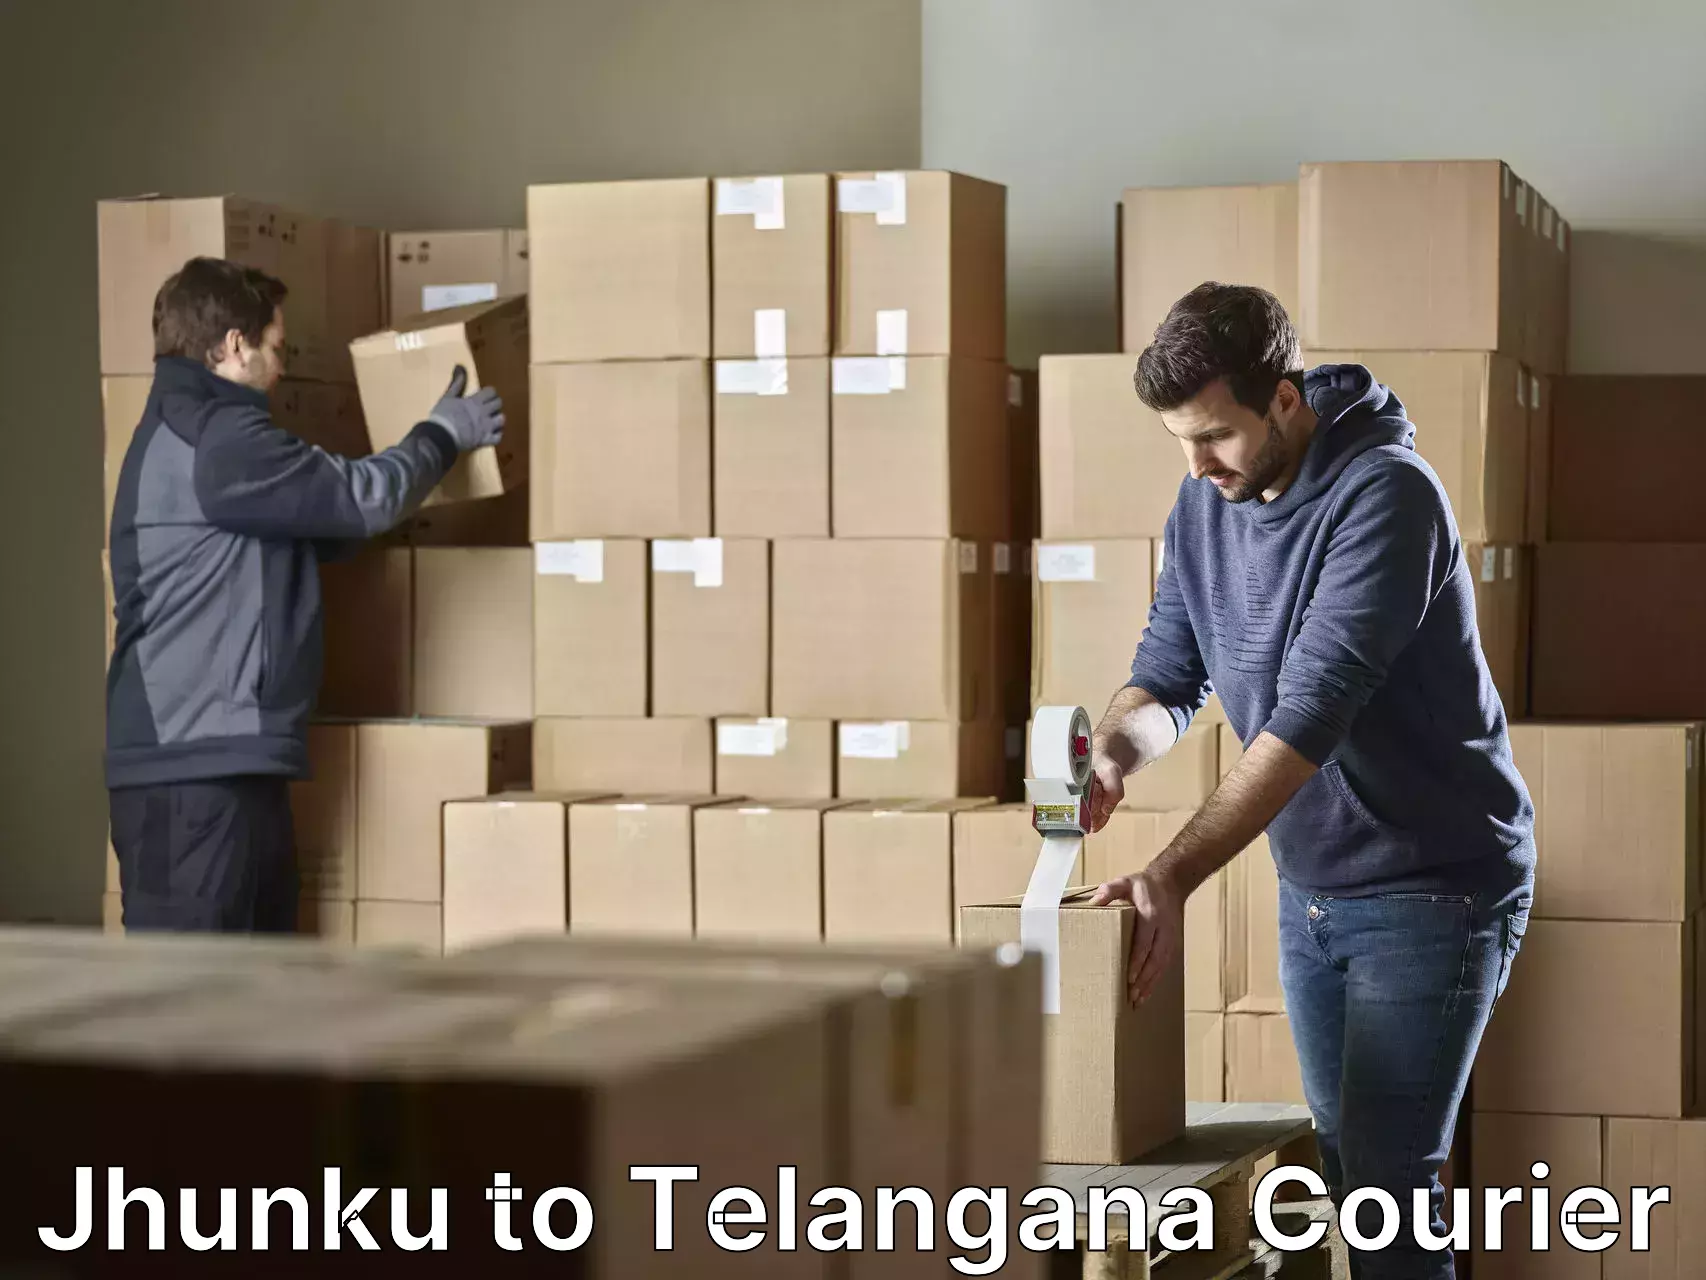 Furniture delivery service Jhunku to Bejjanki